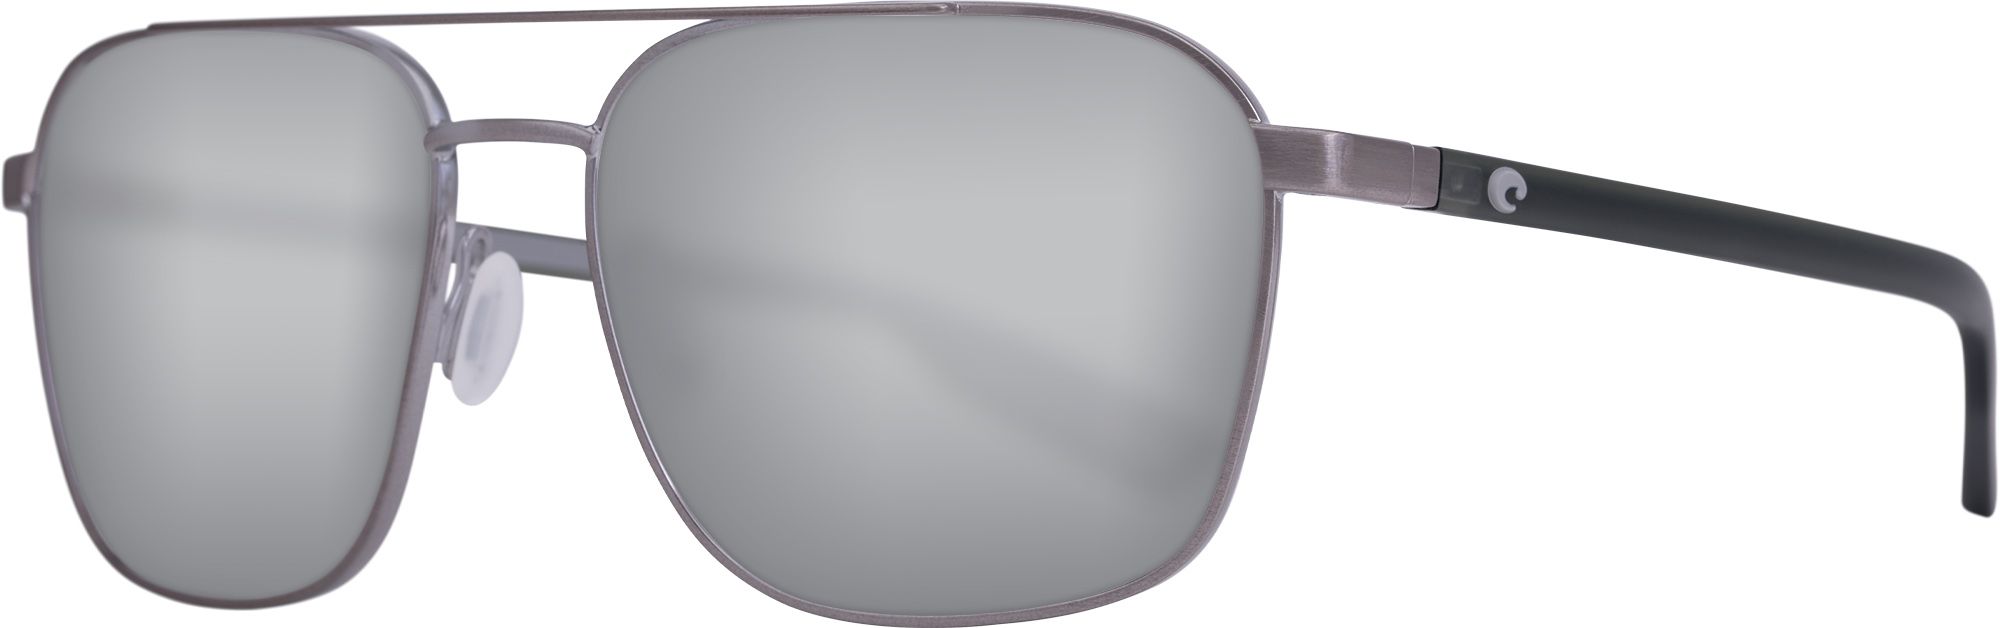 Photos - Sunglasses Costa Del Mar Wader 580P Polarized , Men's, Silver/Gunmetal 20CD 